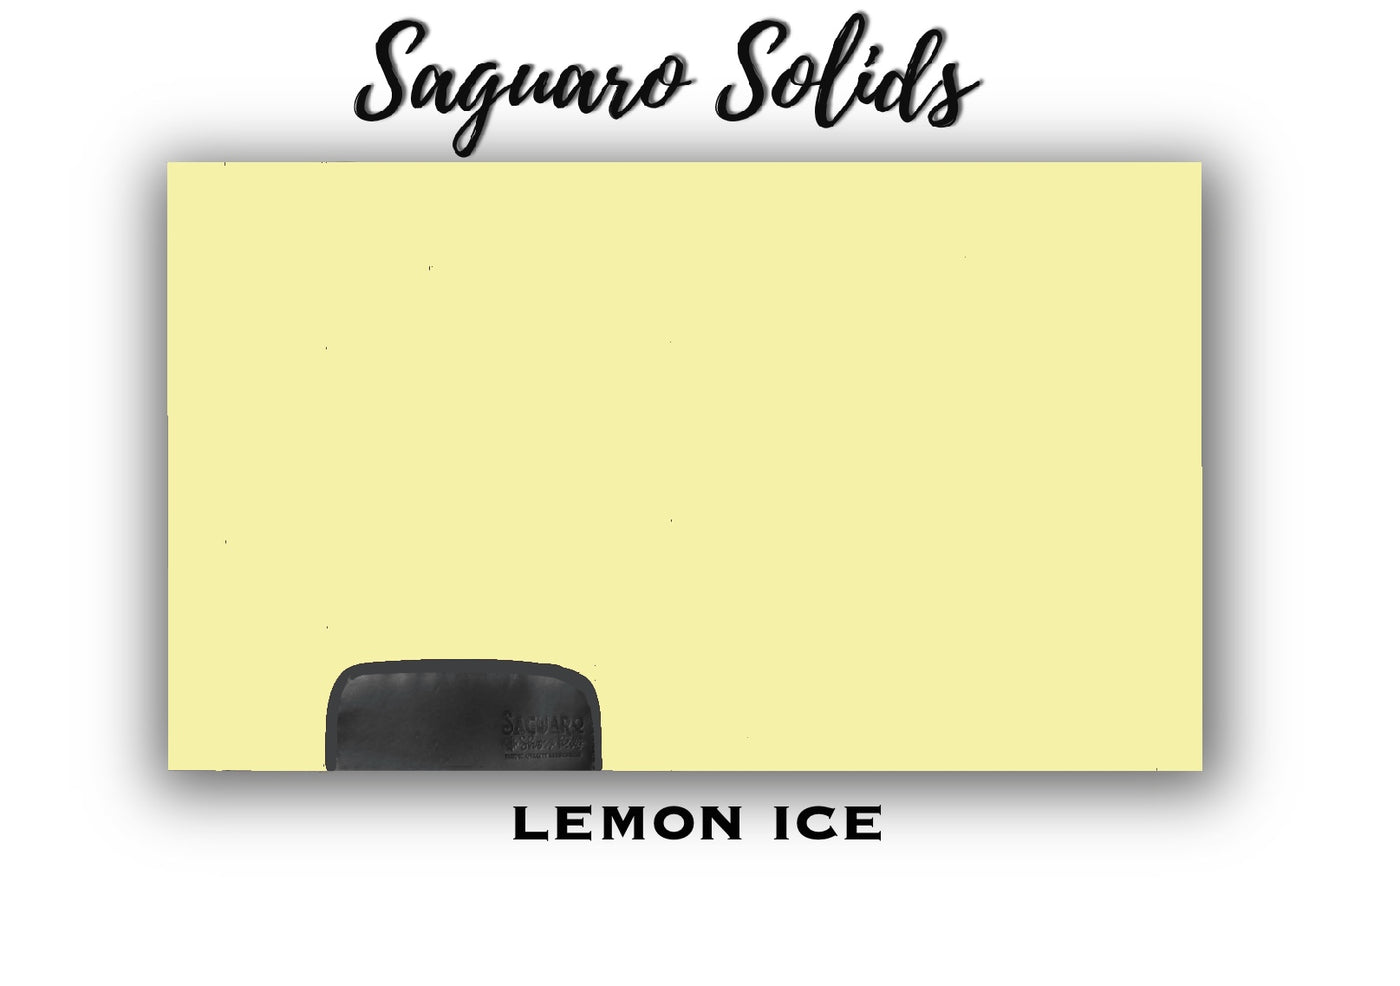 Saguaro Solid "Lemon Ice" Show Pad (SEMI-CUSTOM)